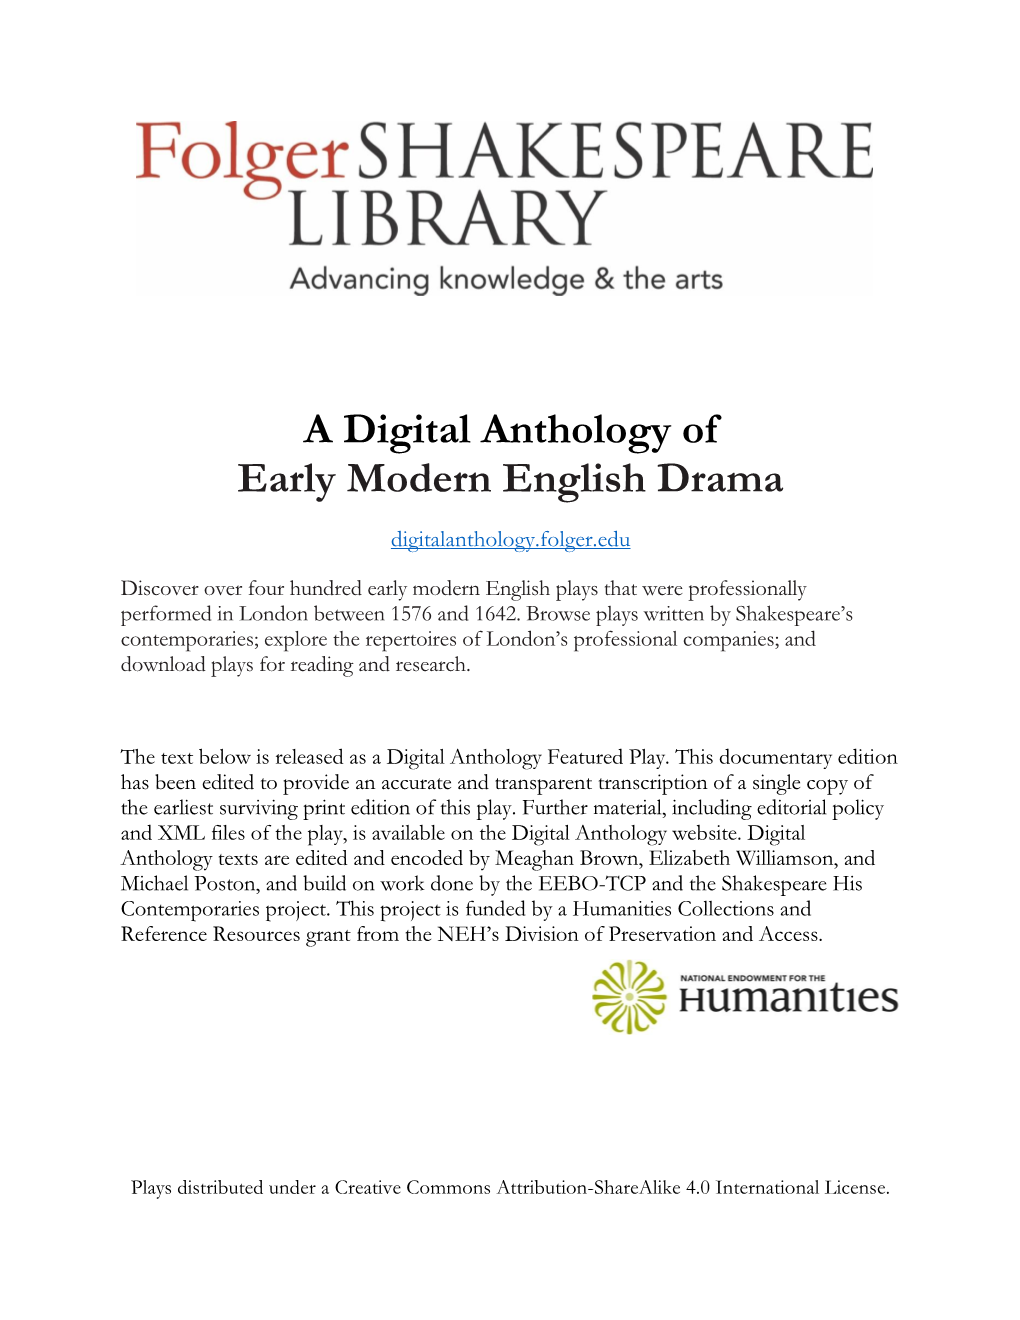 A Digital Anthology of Early Modern English Drama